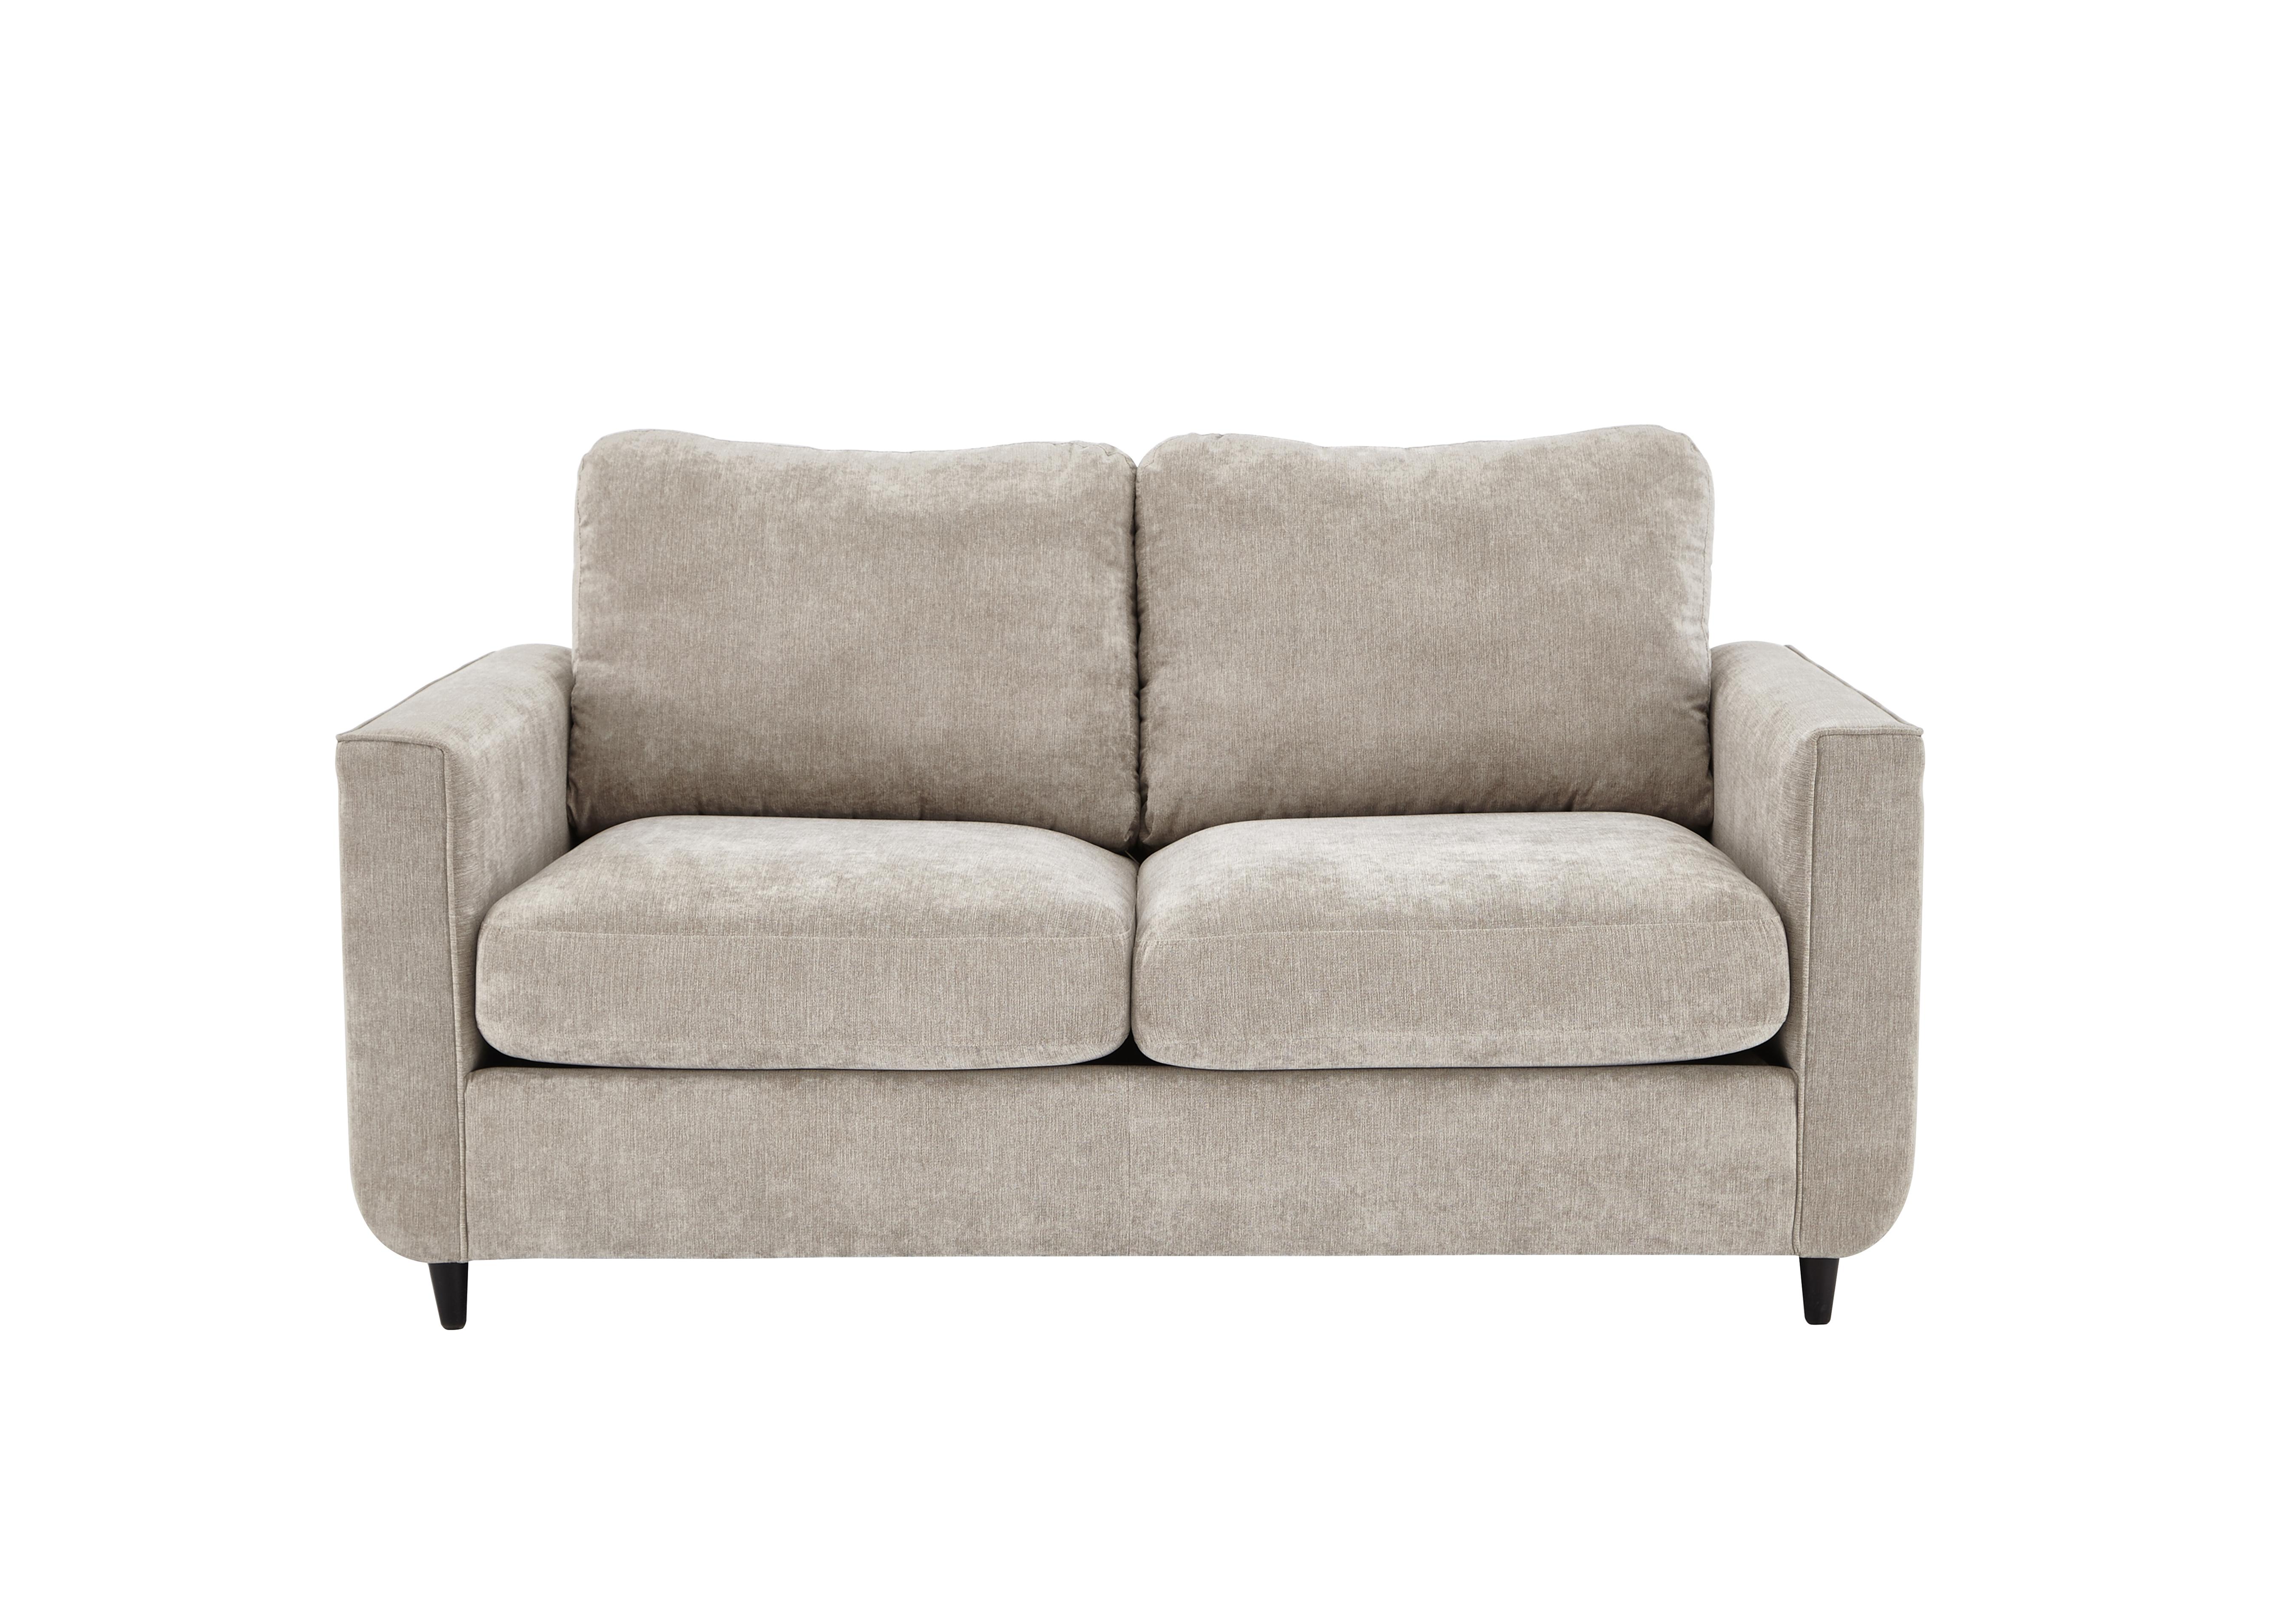 Esprit 2 Seater Fabric Sofa Bed in Silver Ebony Feet on Furniture Village